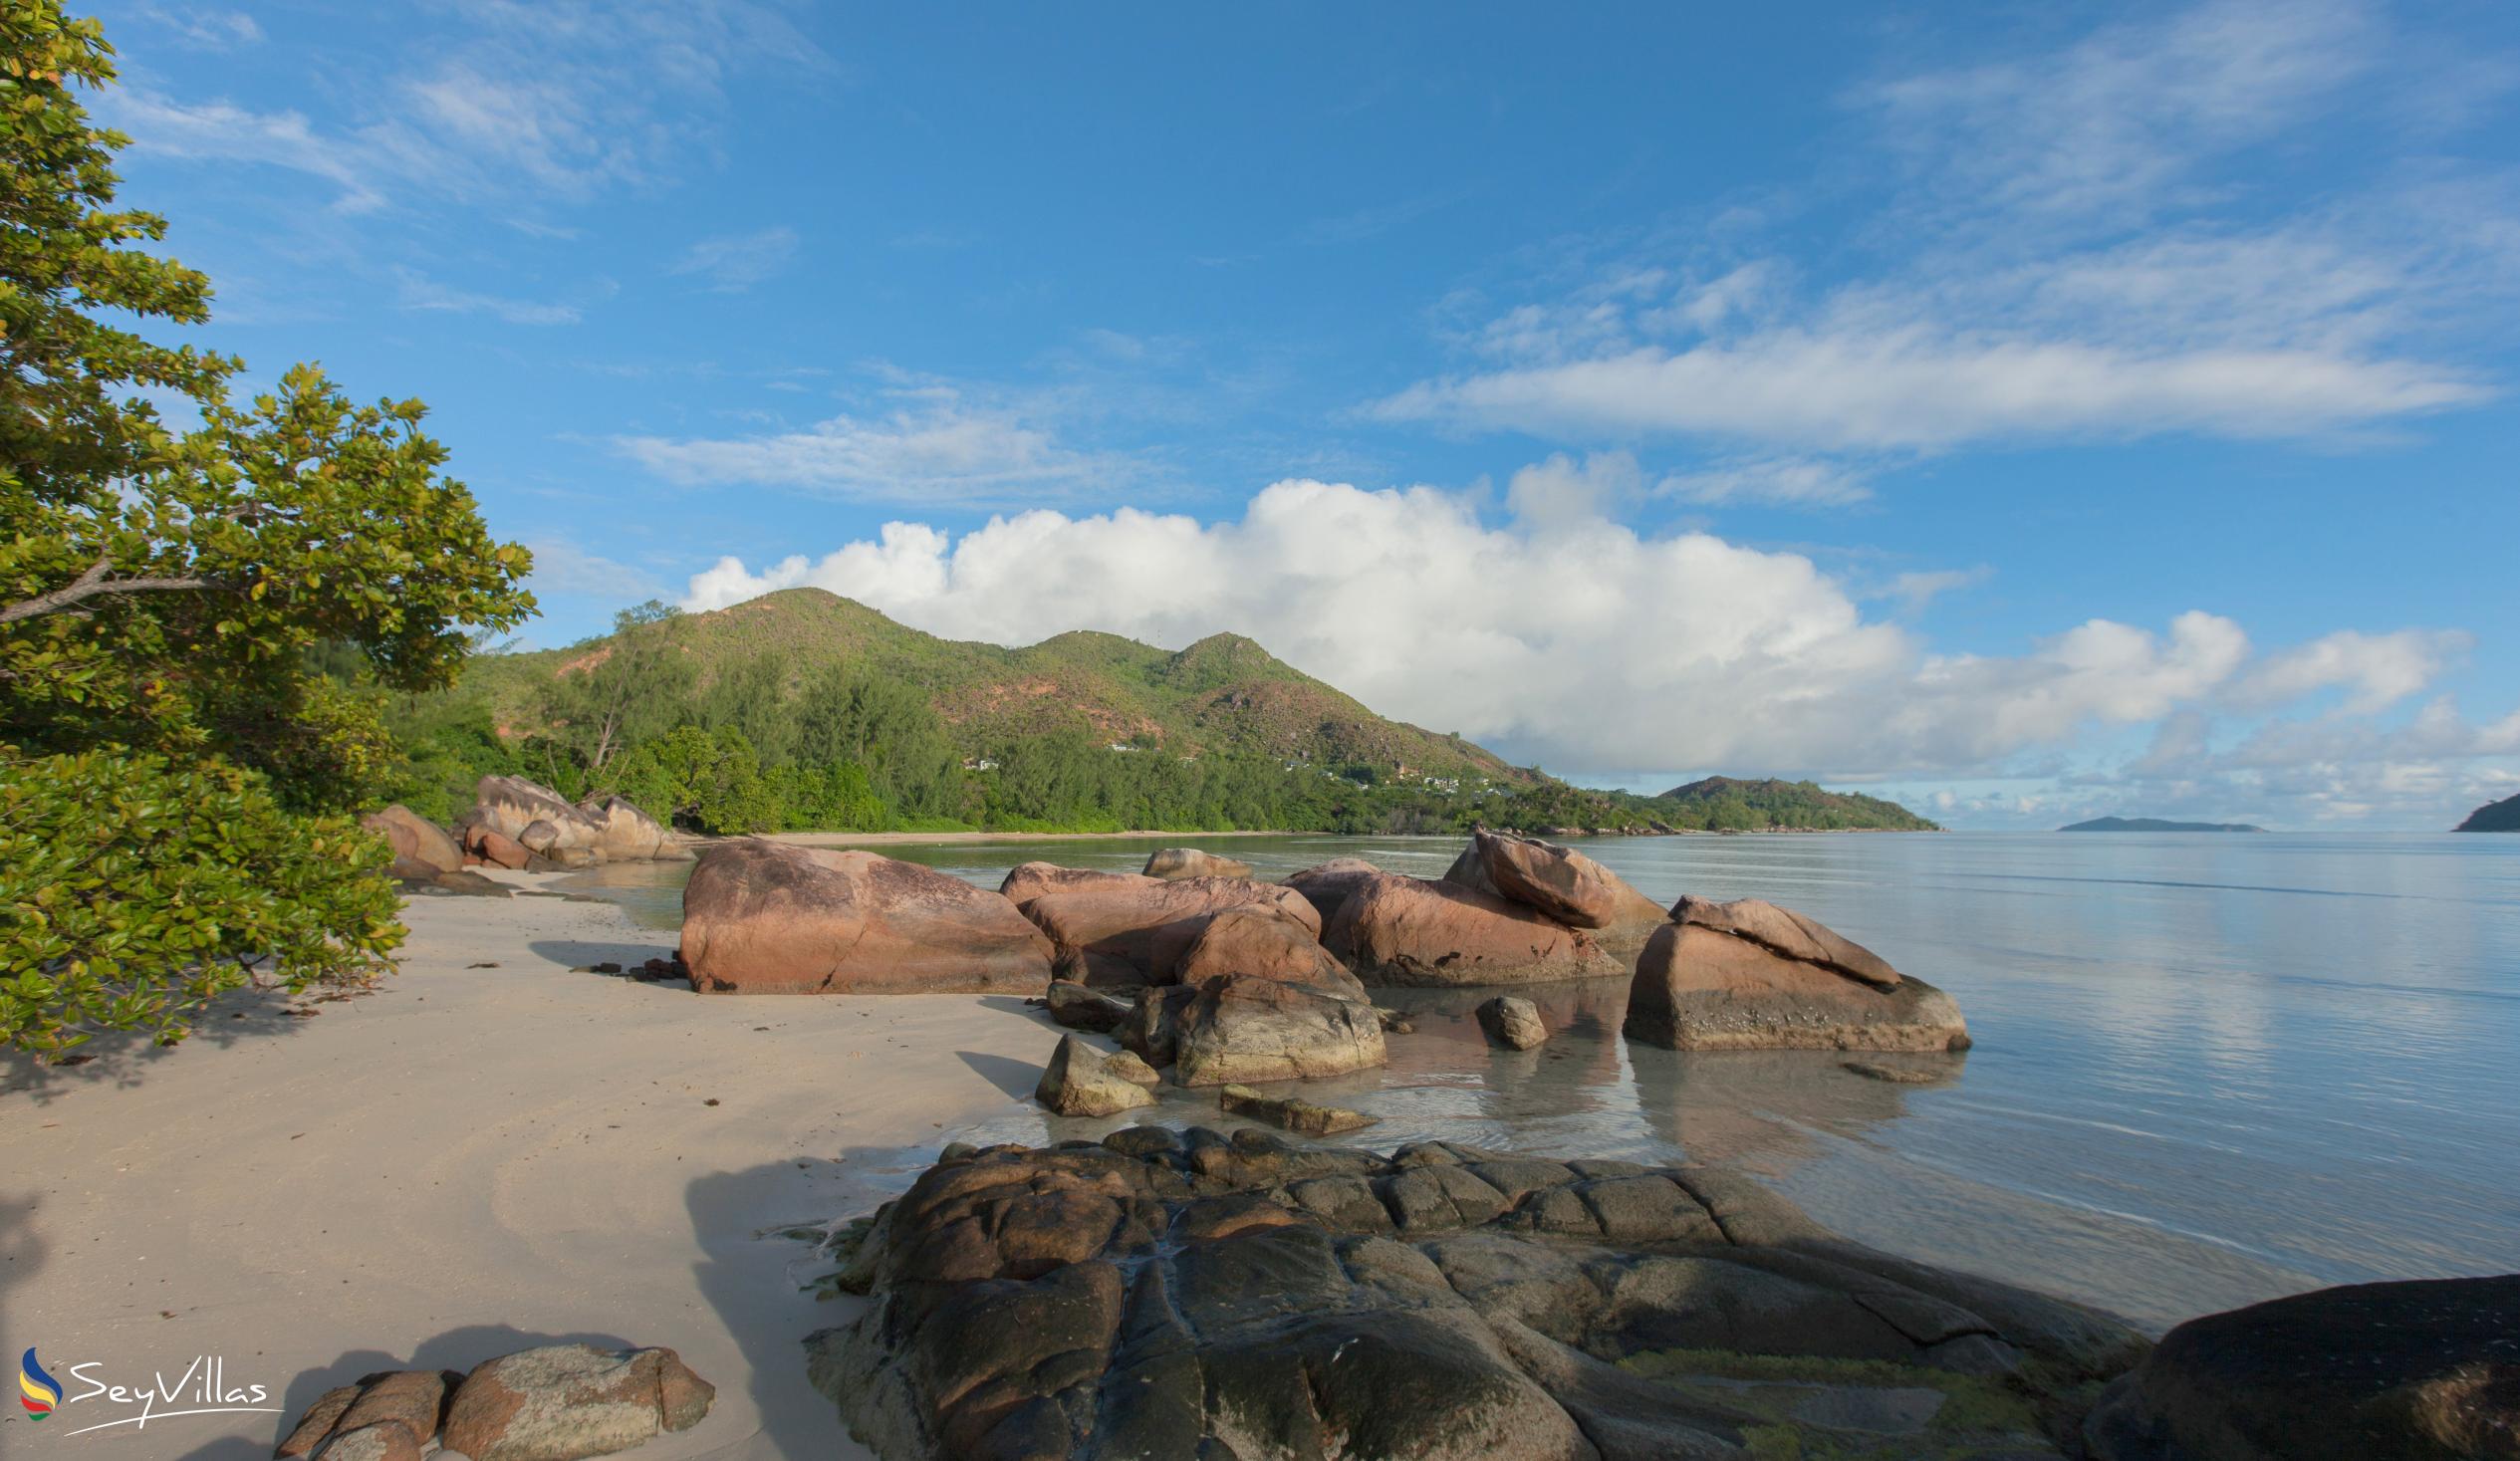 Photo 14: Anse Pasquière - Praslin (Seychelles)